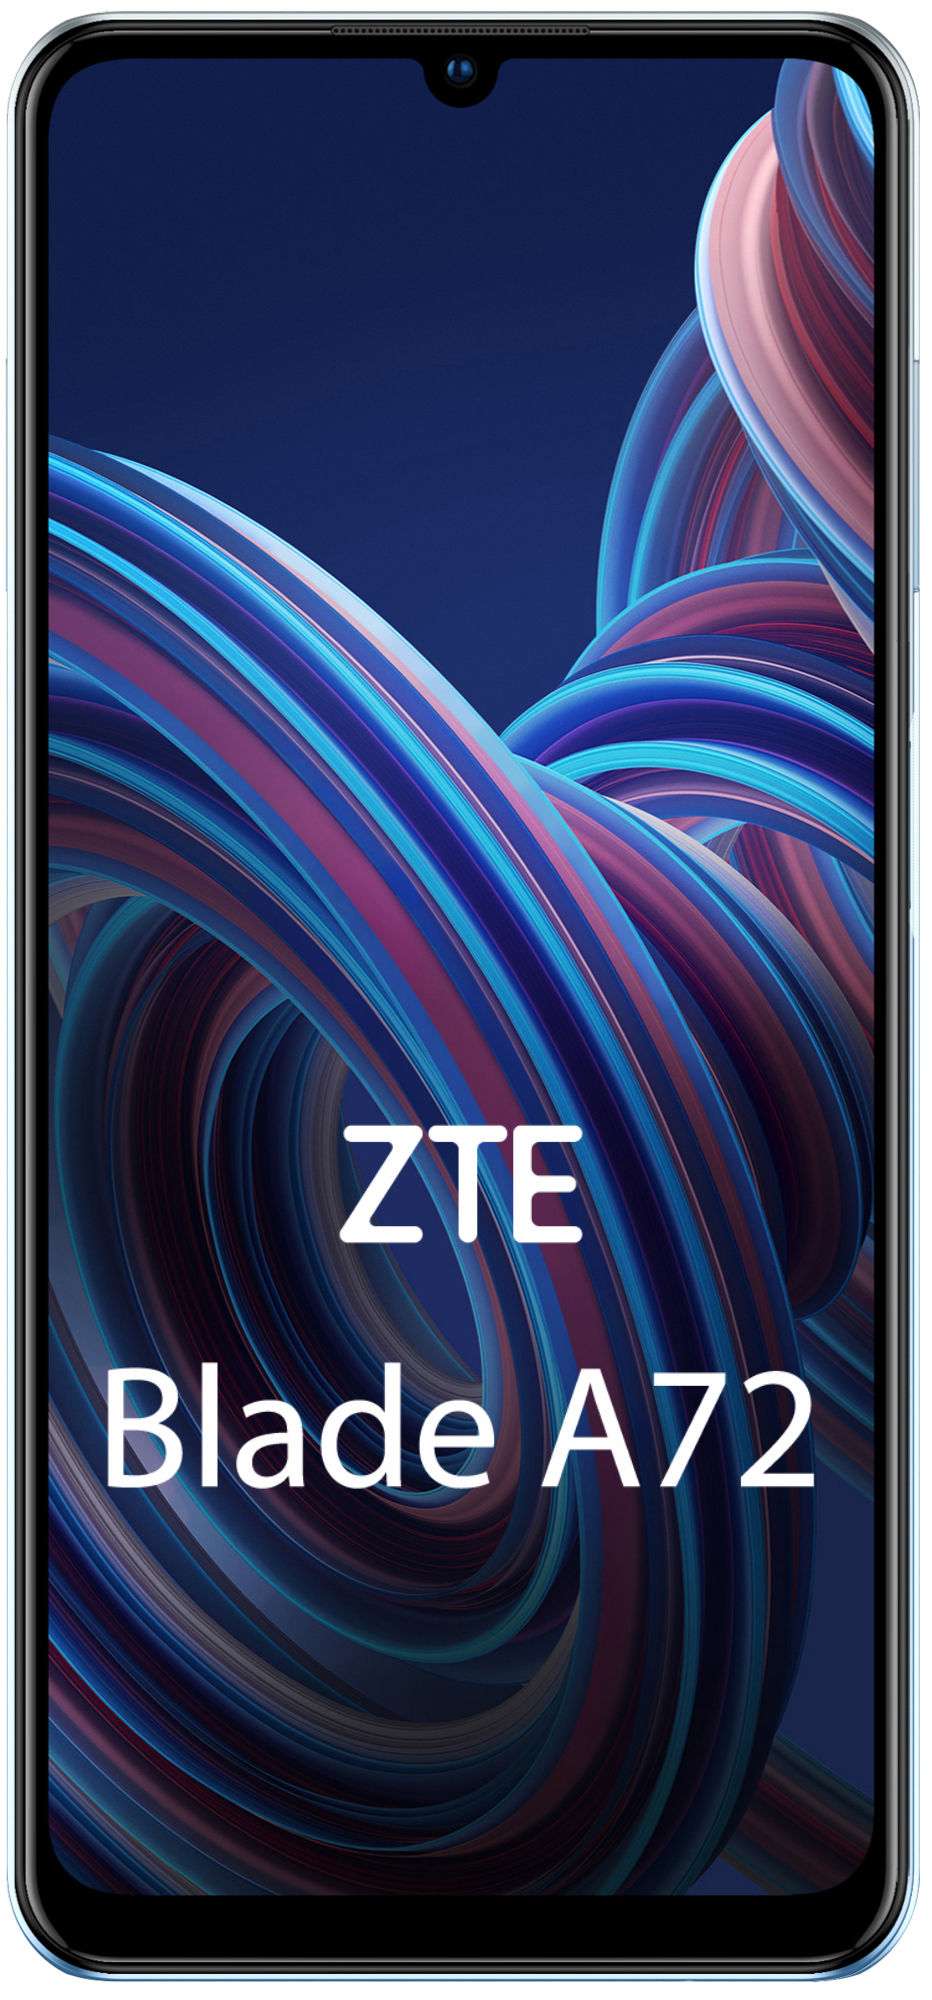 Blade SIM Dual Blau GB 64 ZTE A72